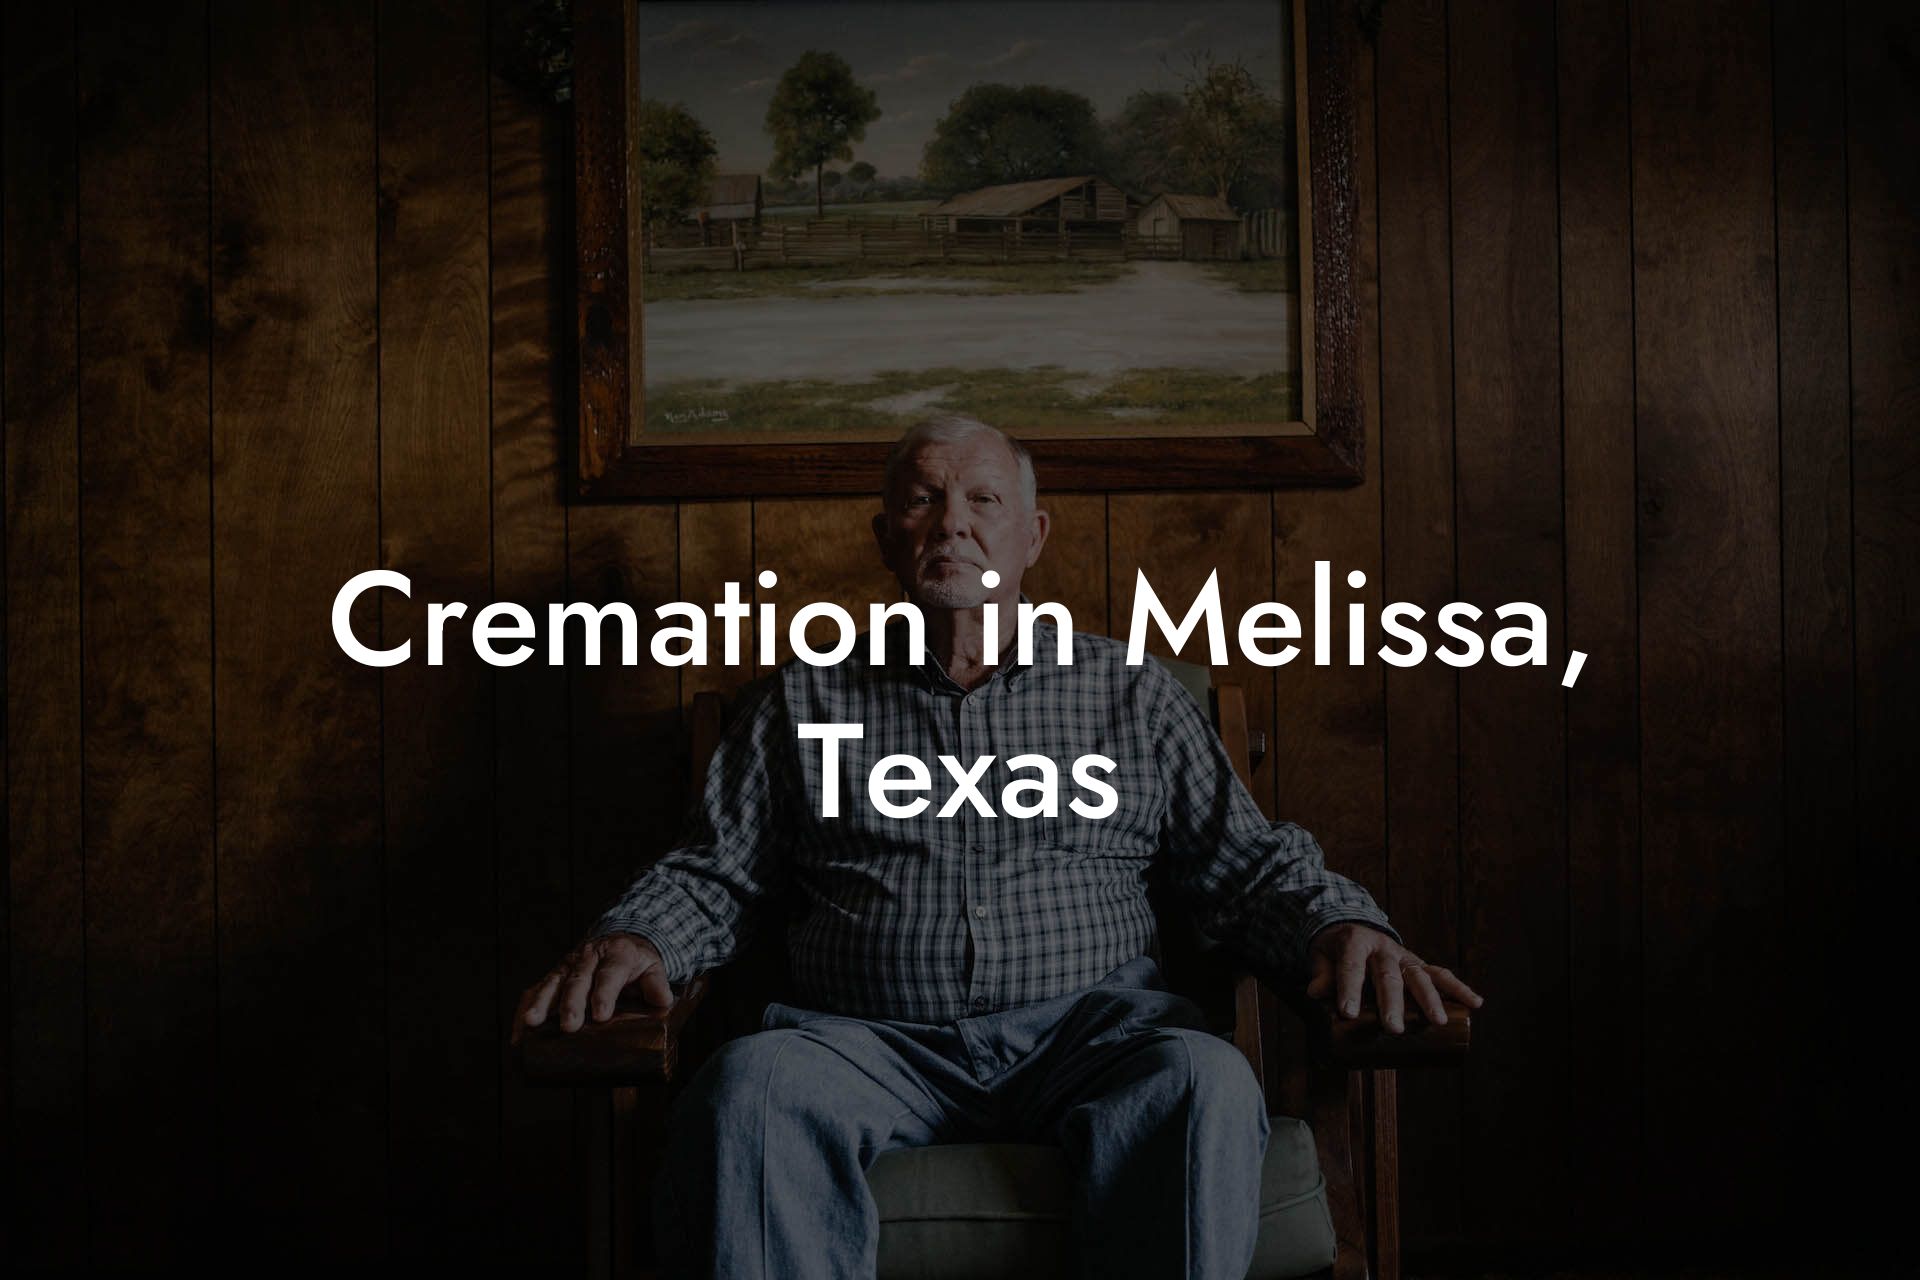 Cremation in Melissa, Texas